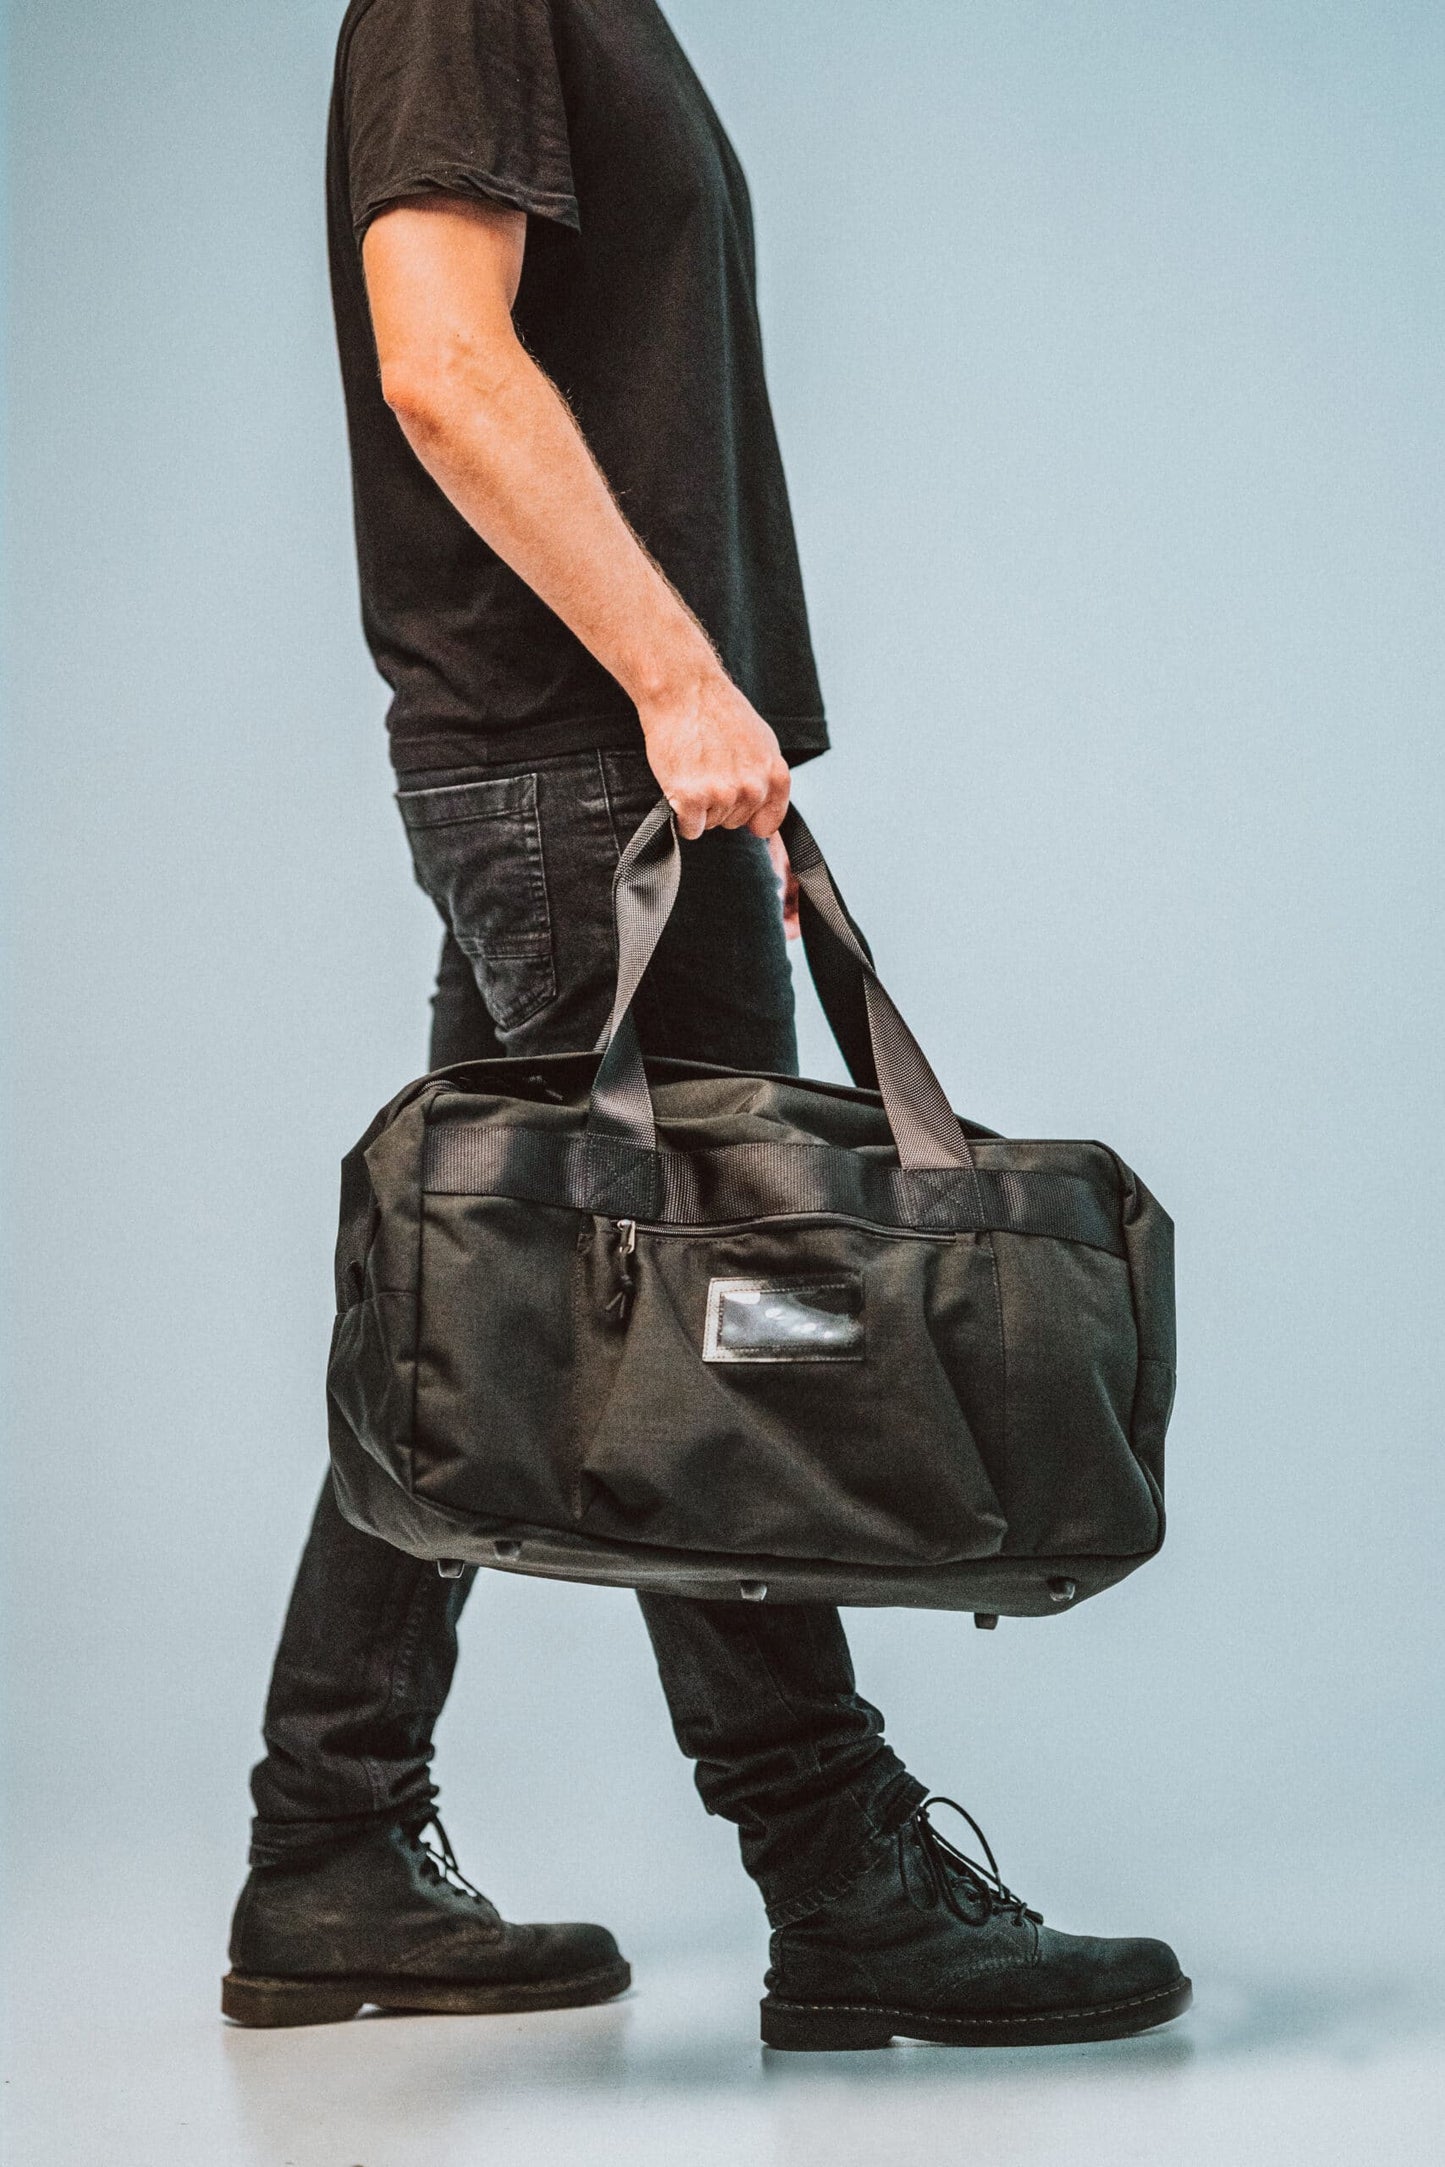 Travel Bag 008 - Black